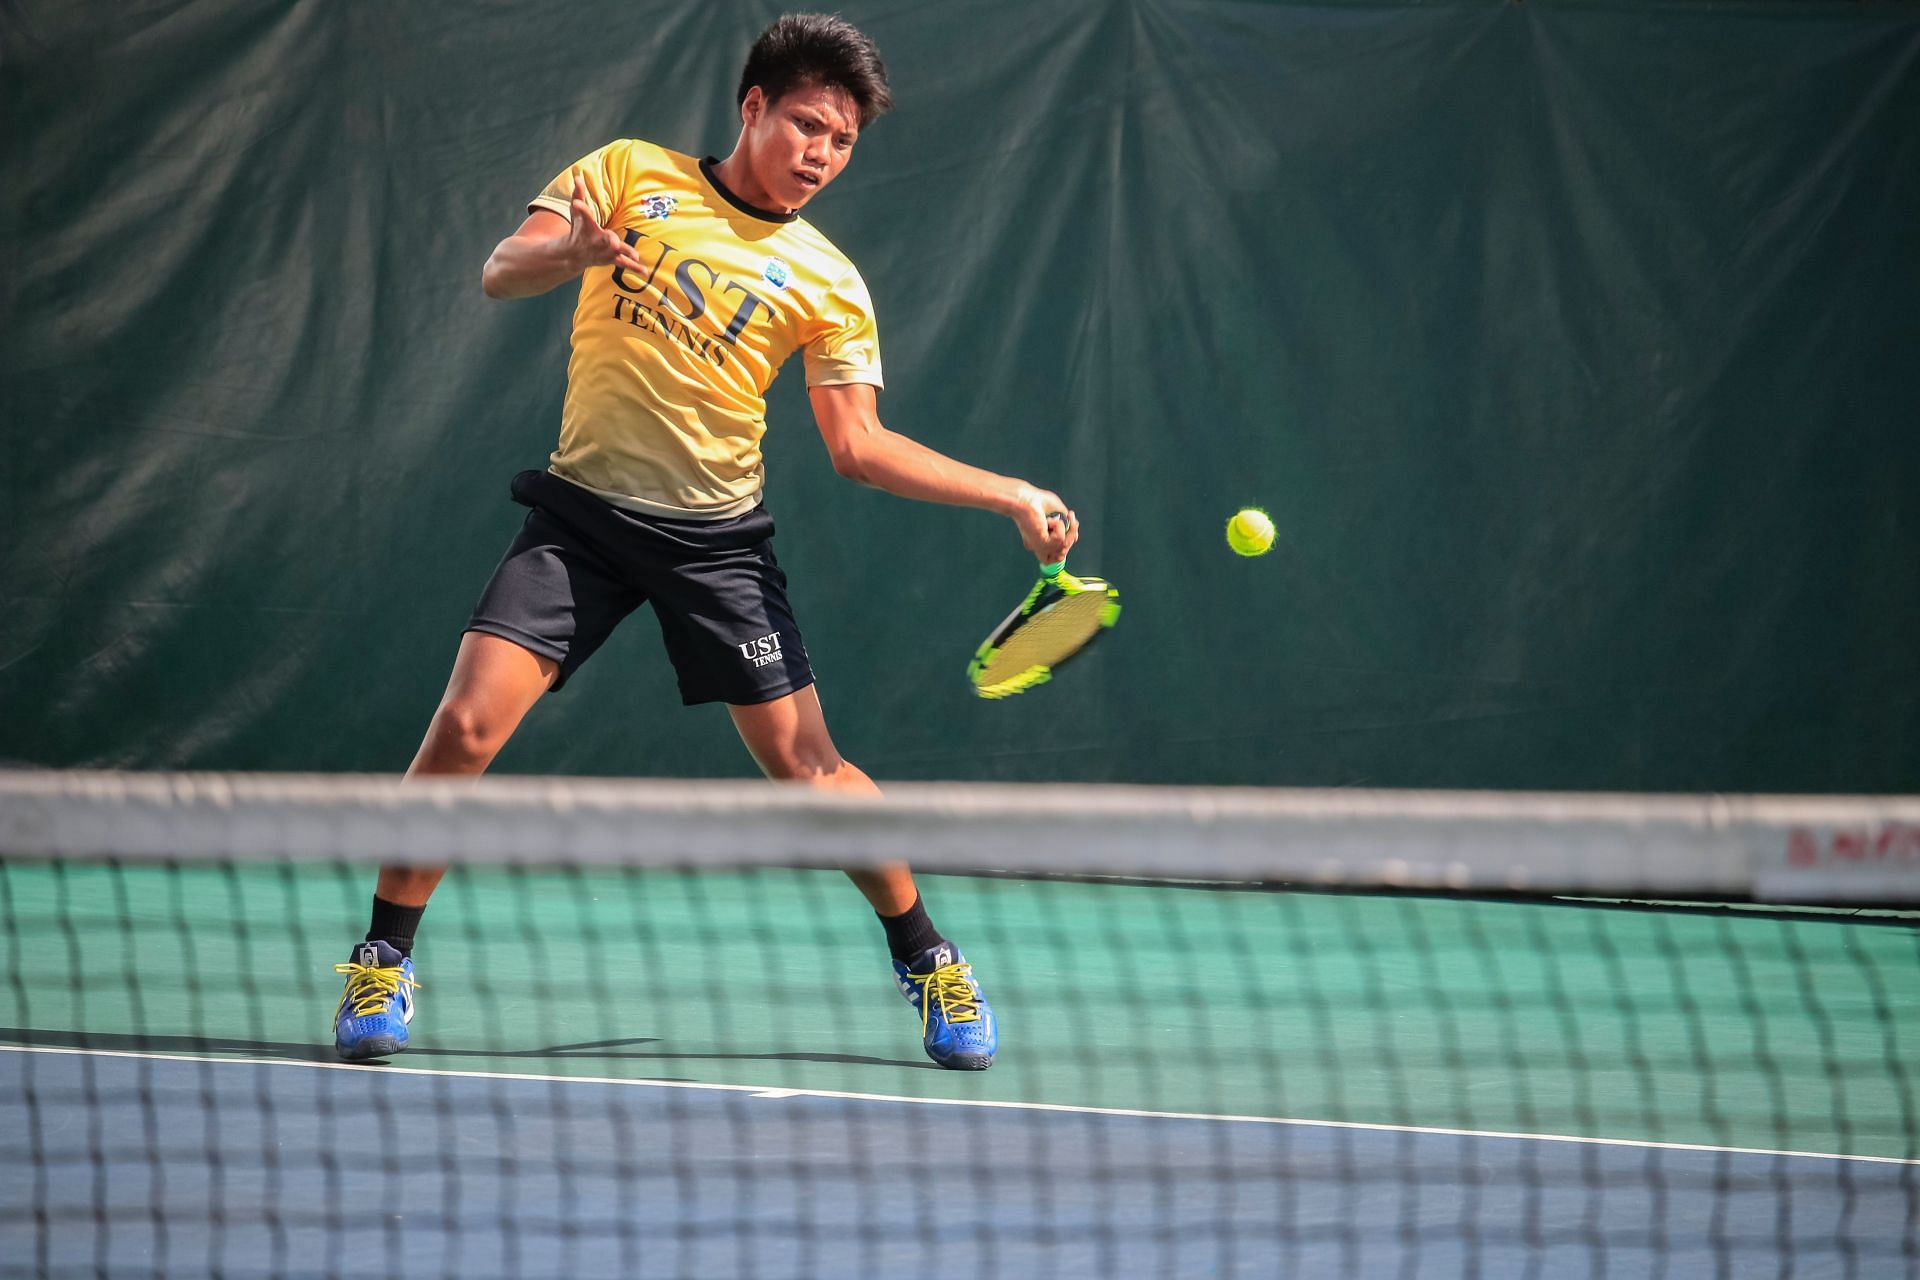 Upper body strength is crucial for good performance in tennis (Image via Pexels @Jim de Ramos)